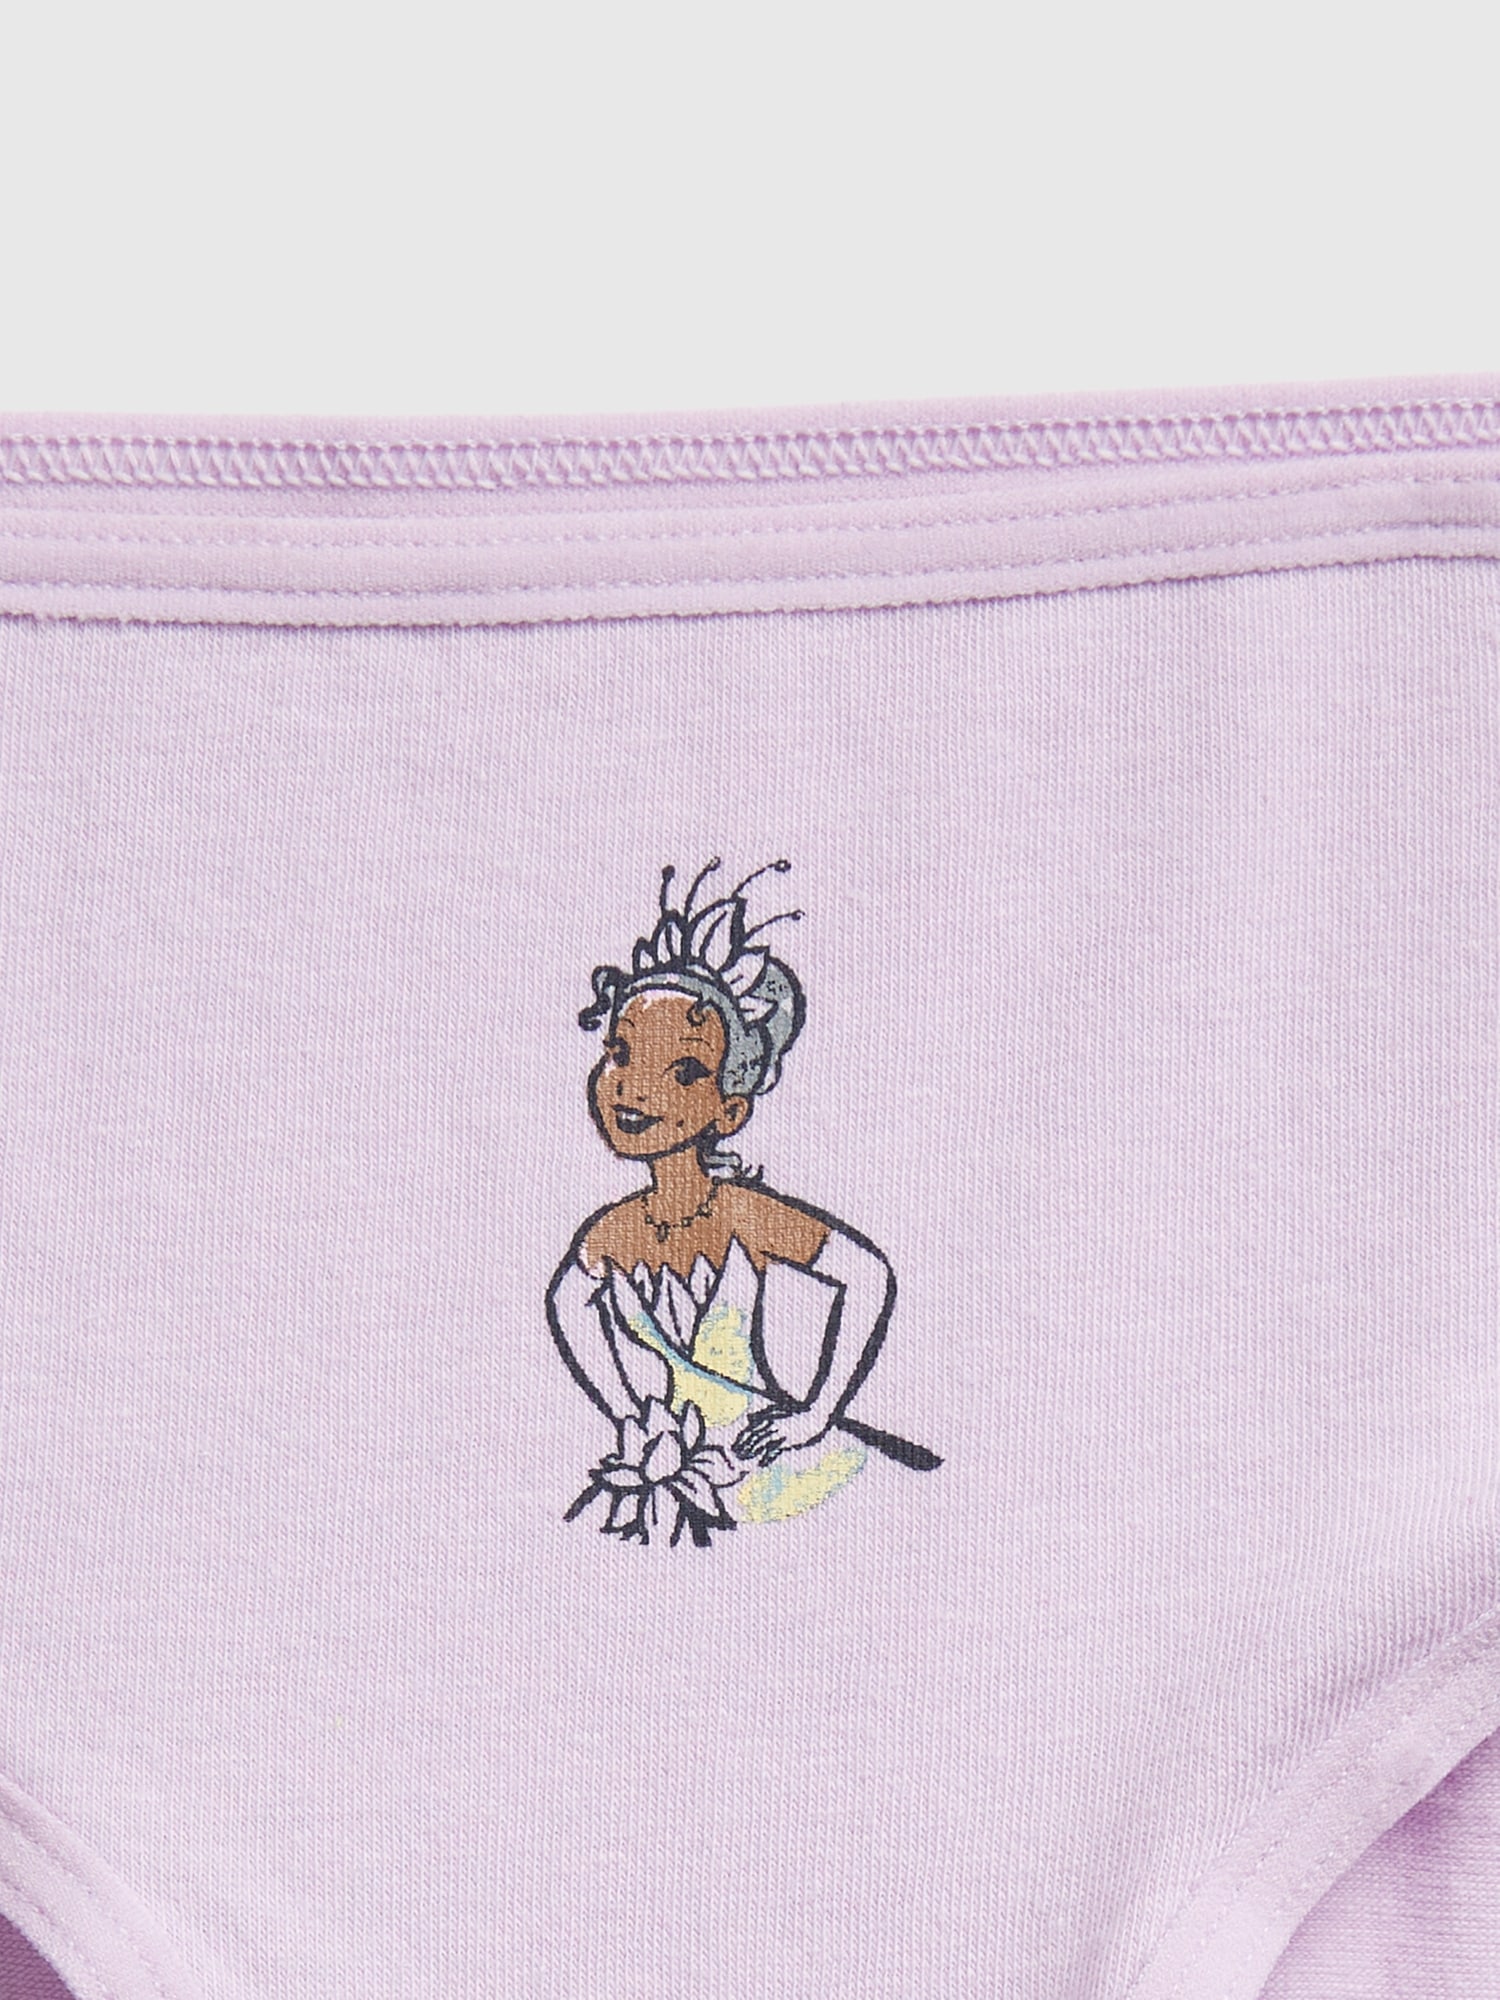 Disney Princess Underwear 5 Pack